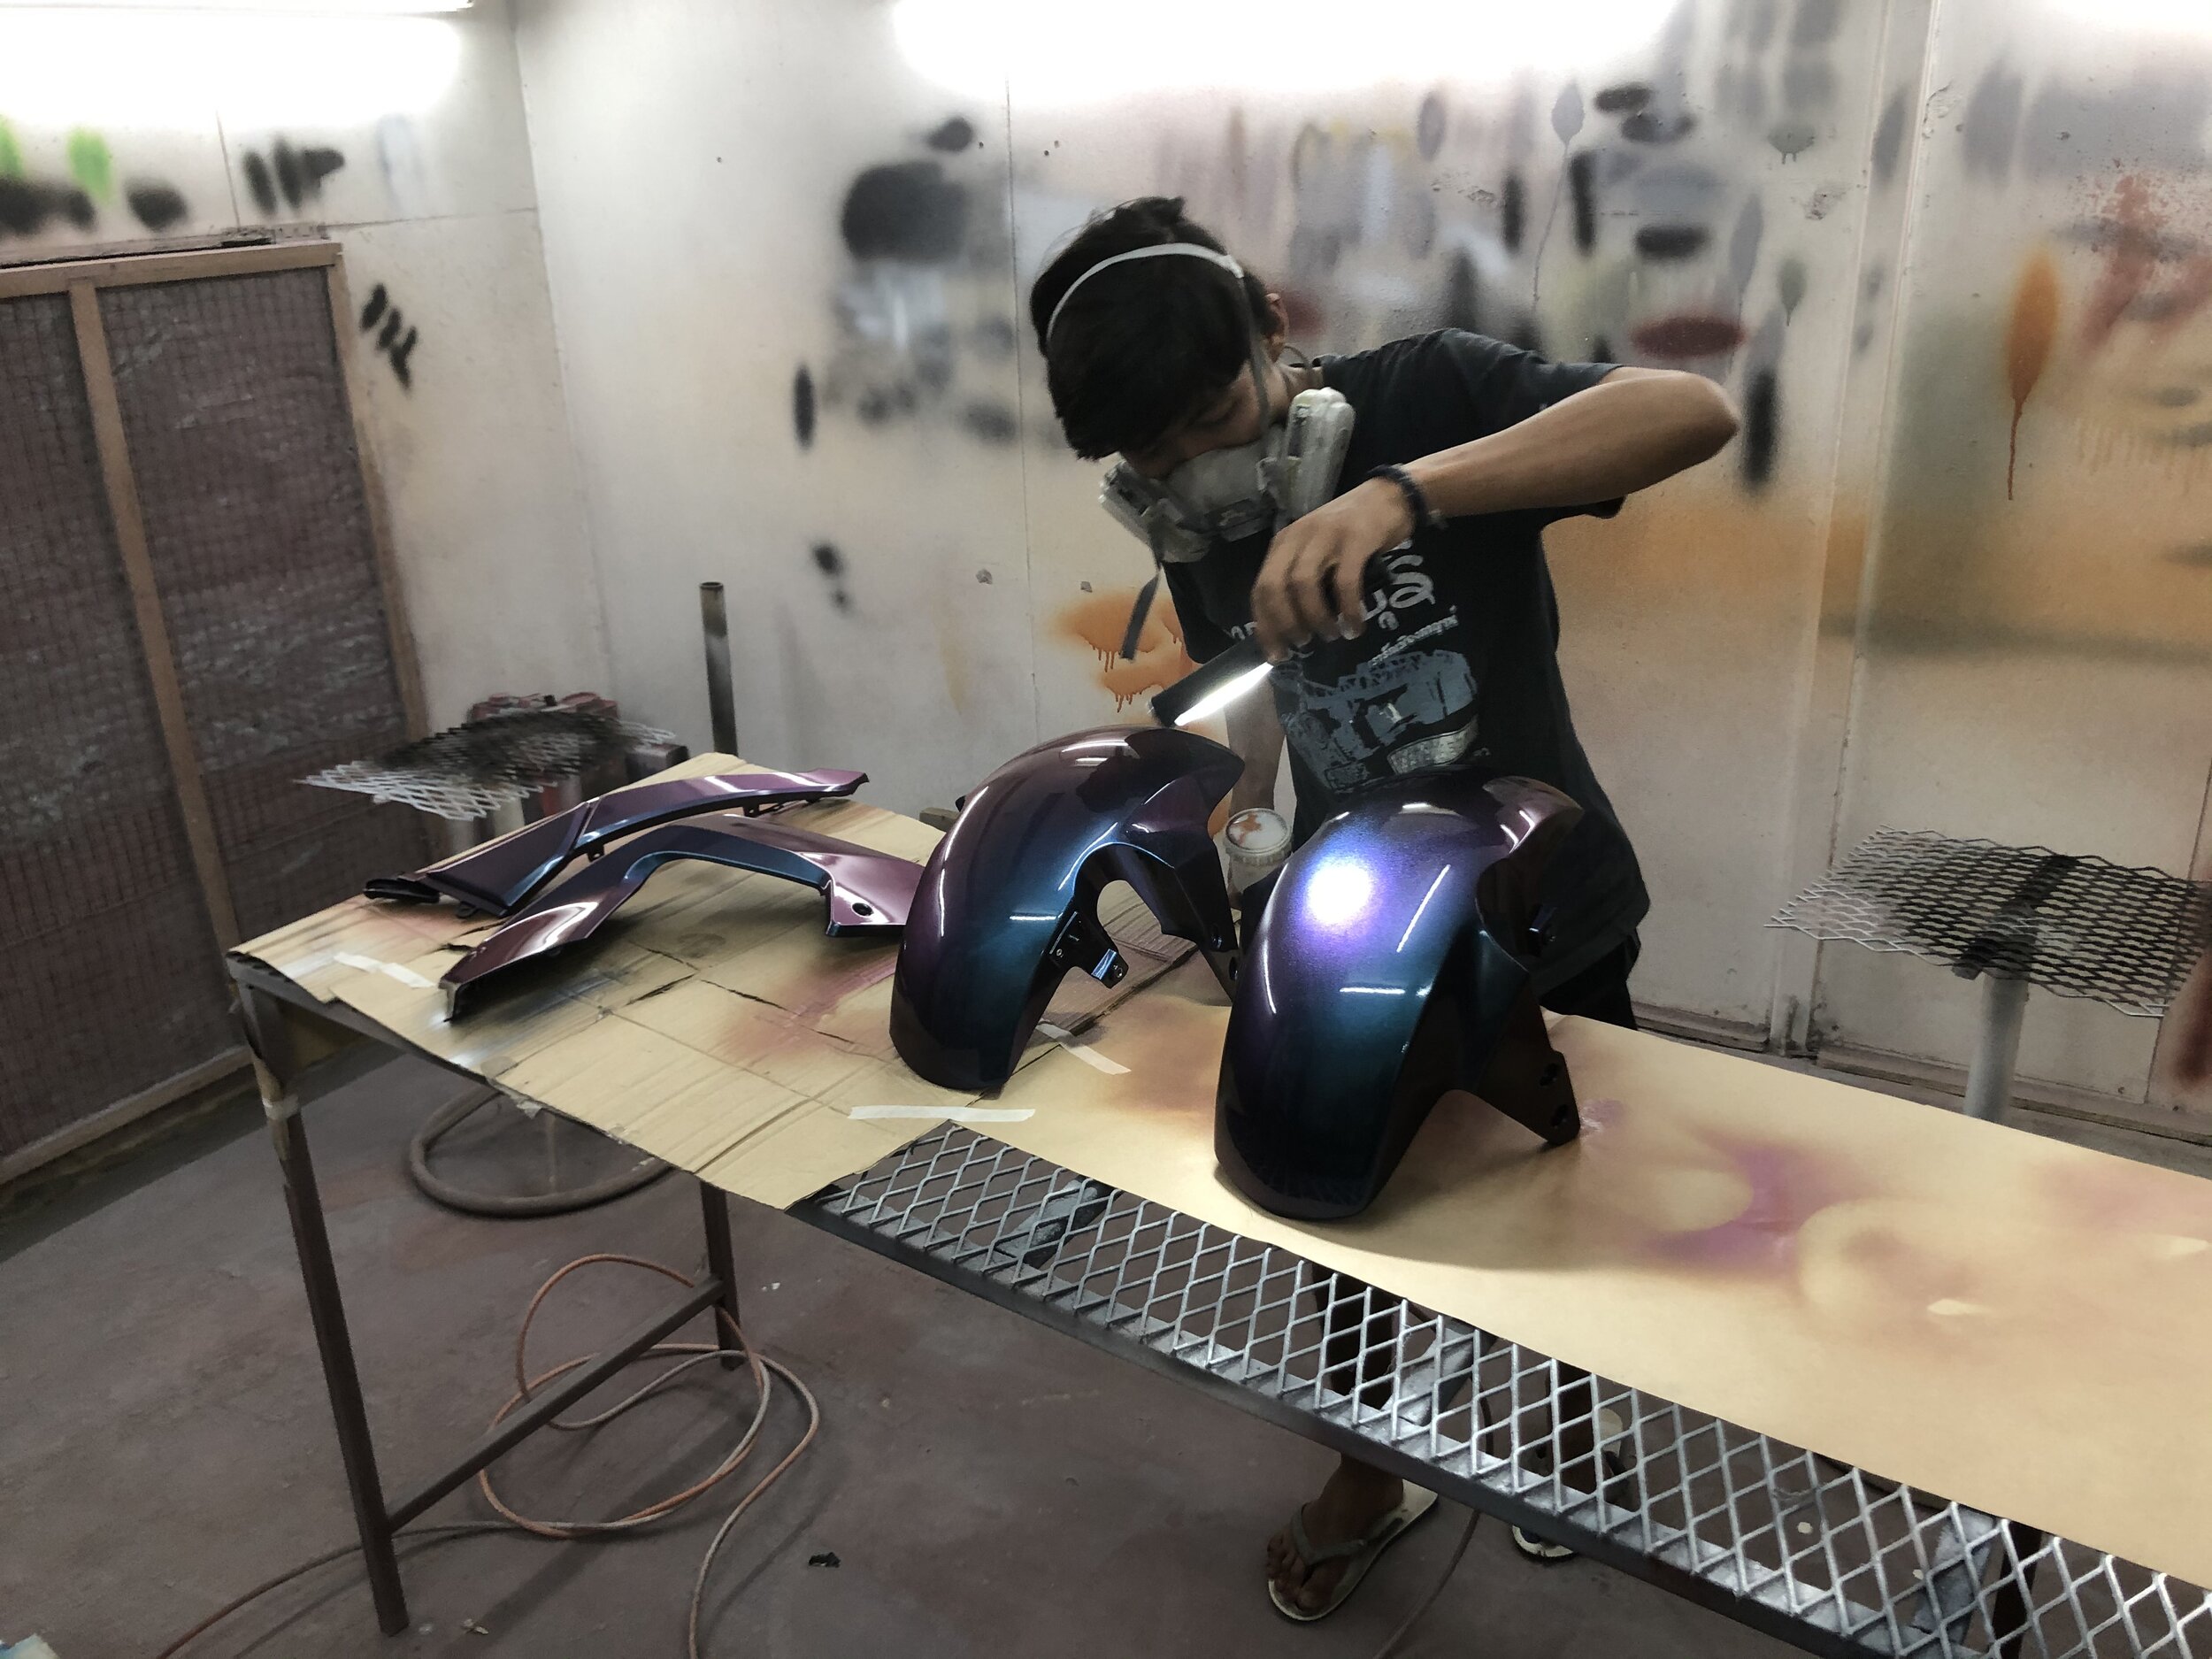 Chameleon Custom Painted Motorbike Parts &amp; Cars